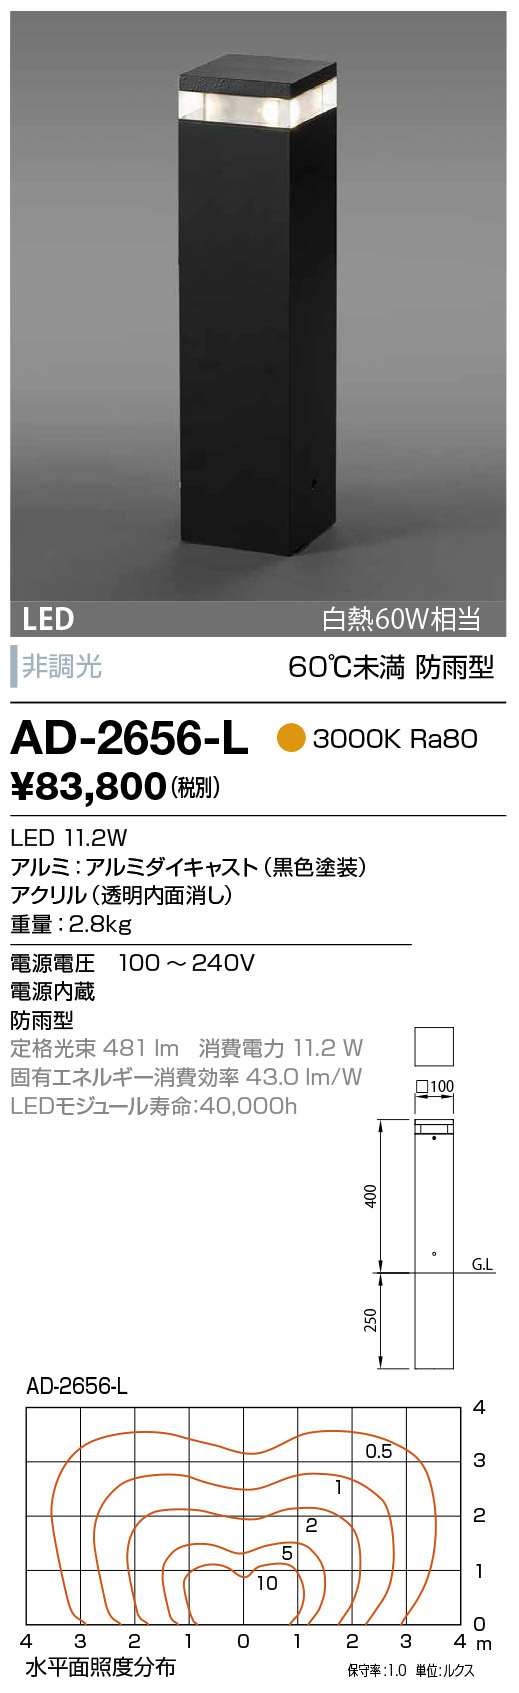 AD-2656-L(山田照明) 商品詳細 ～ 照明器具・換気扇他、電設資材販売のブライト